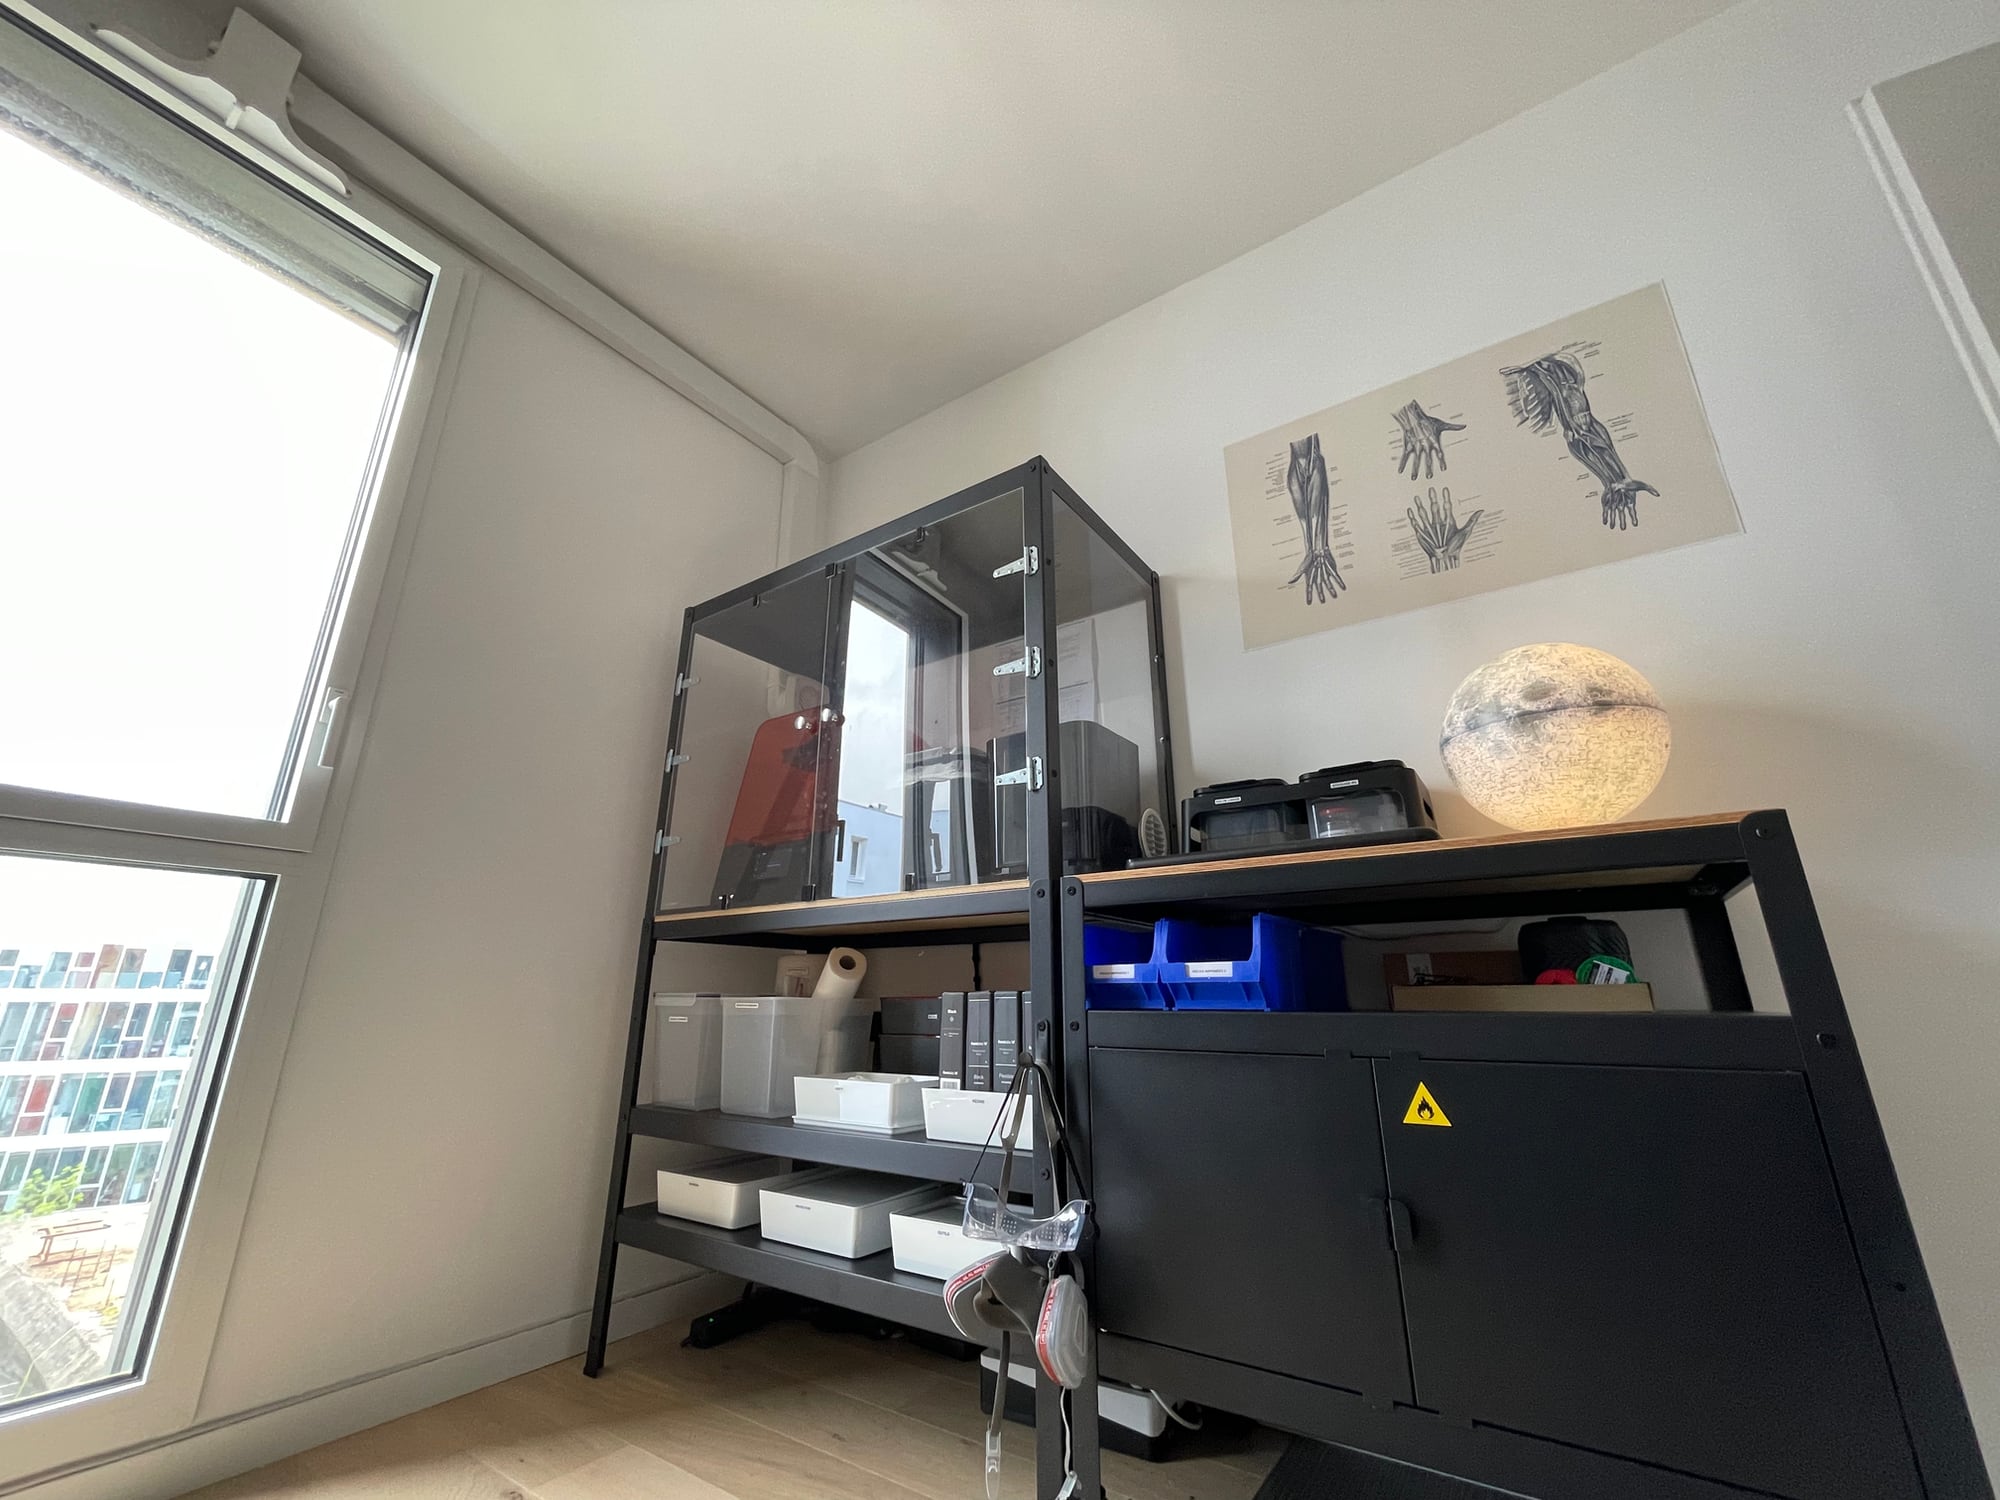 3D Printing: My DIY Formlabs Enclosure Project